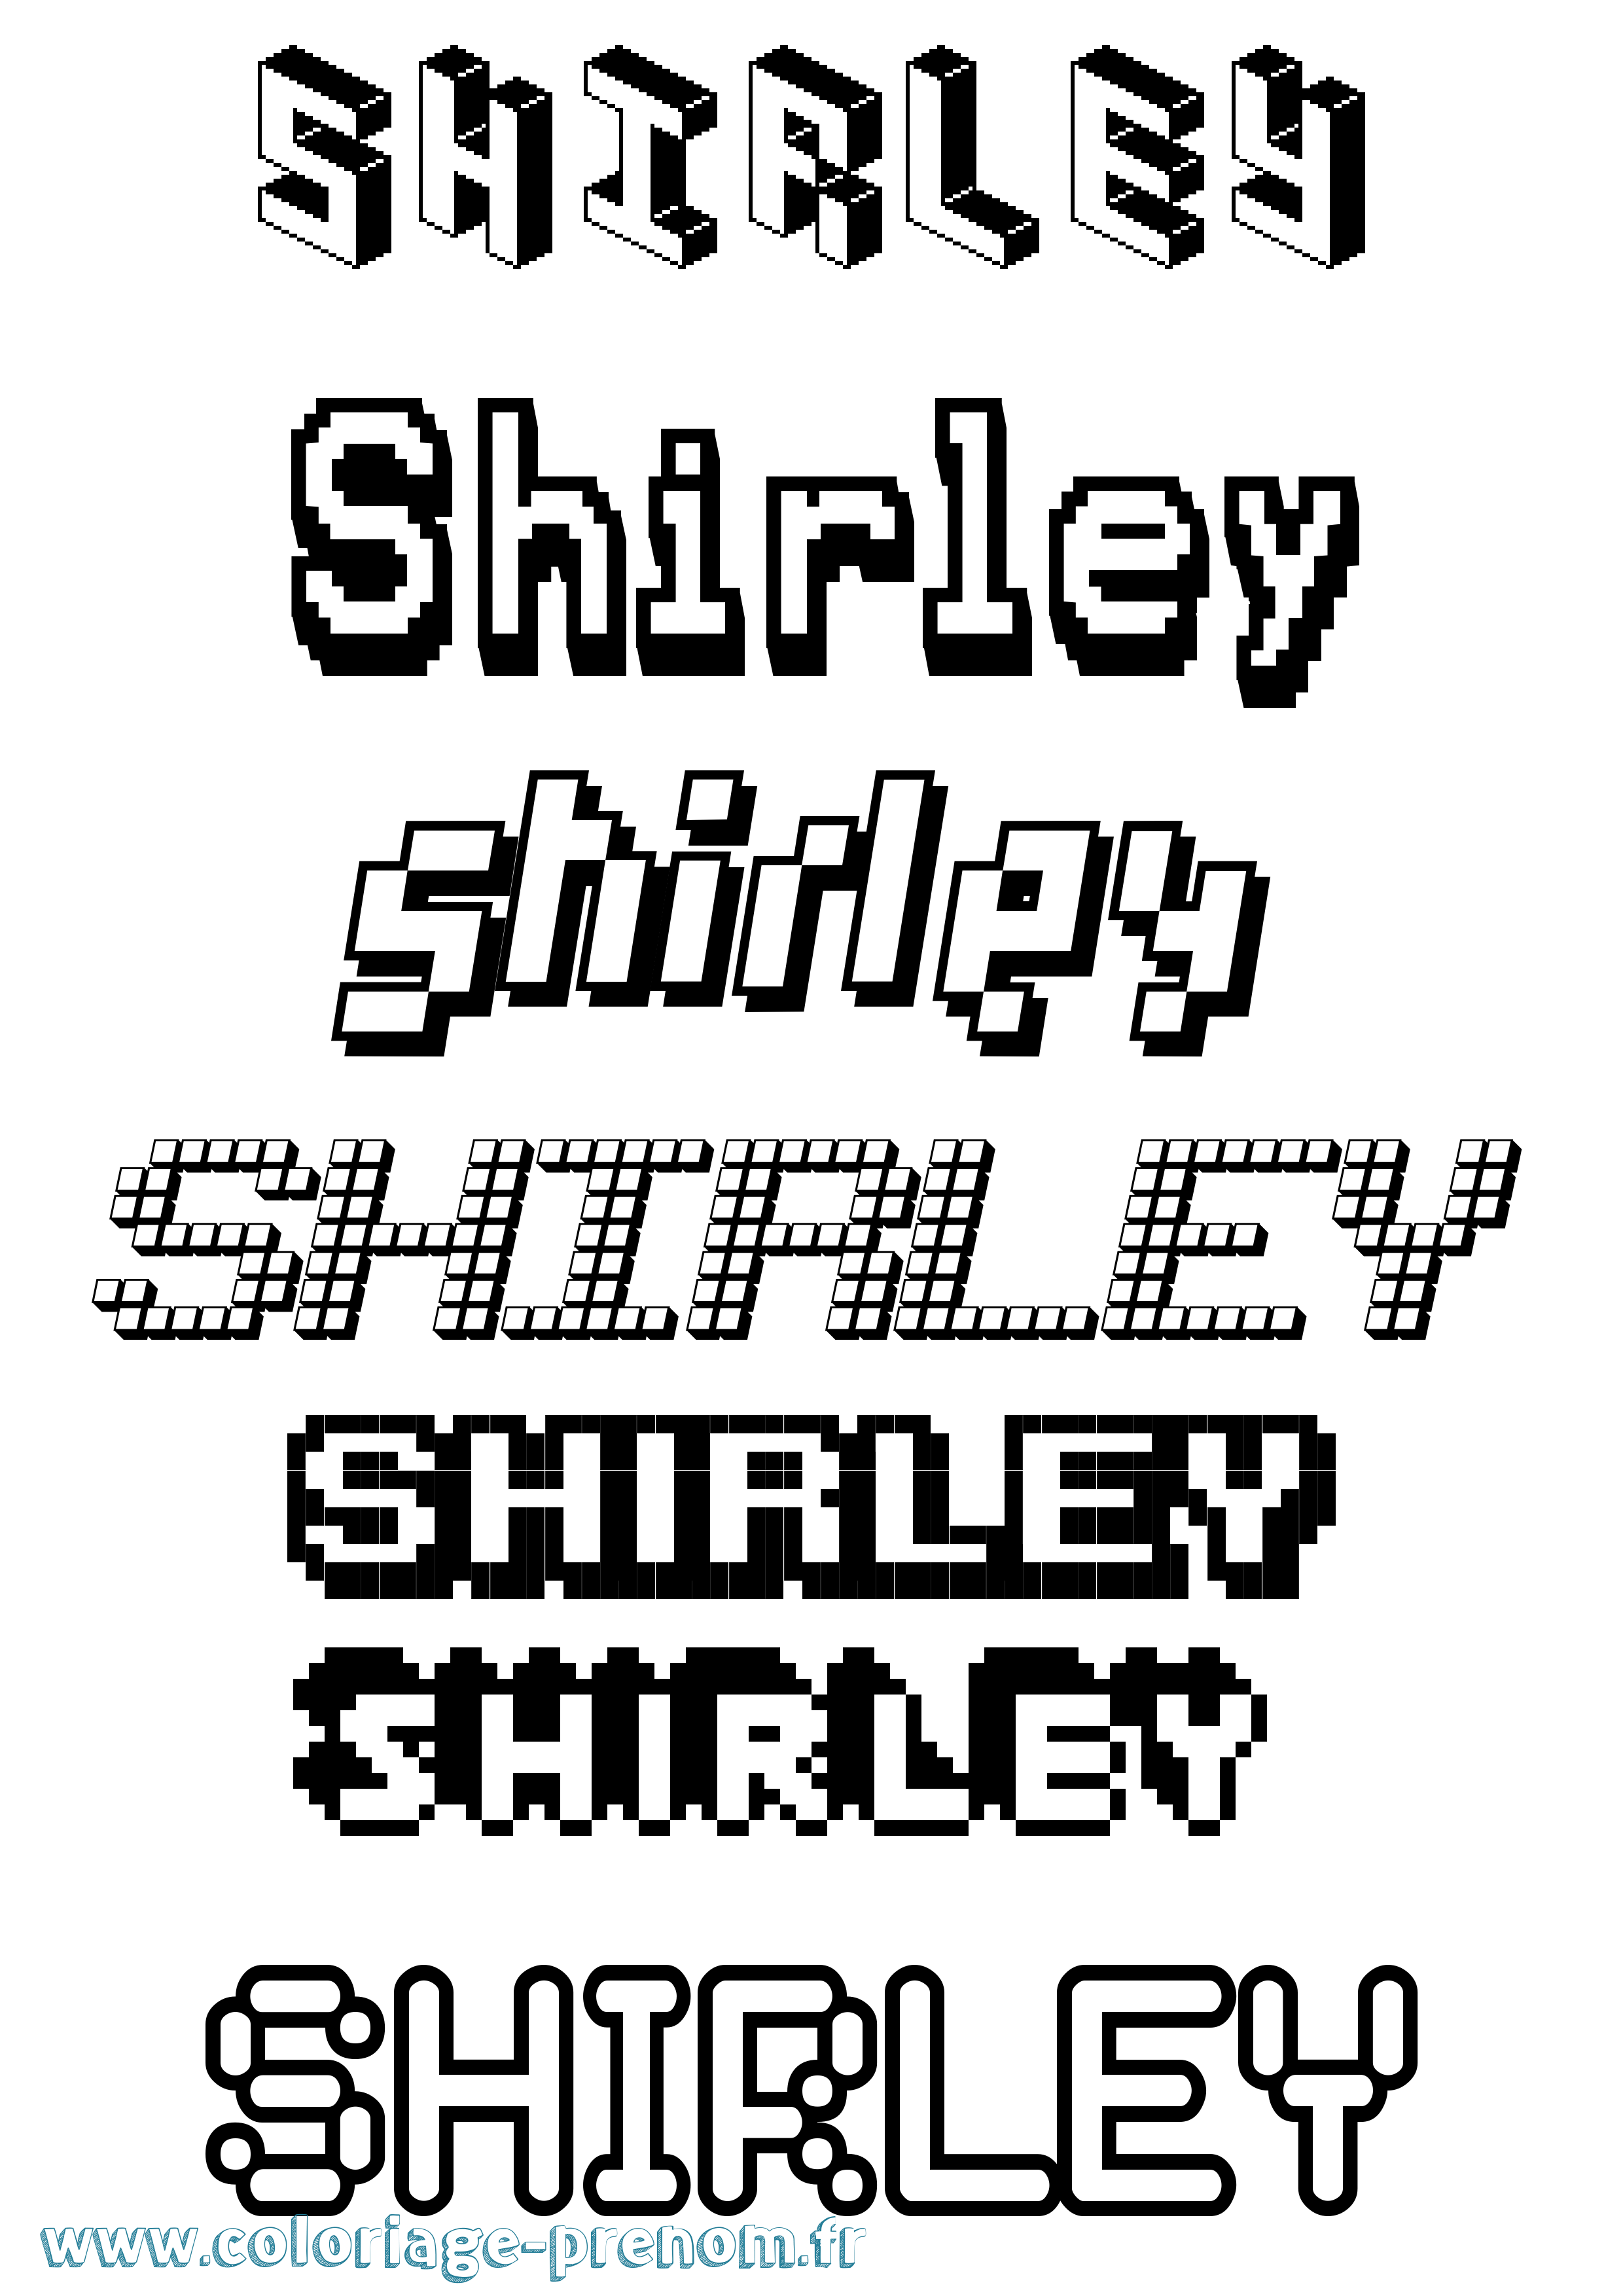 Coloriage prénom Shirley Pixel